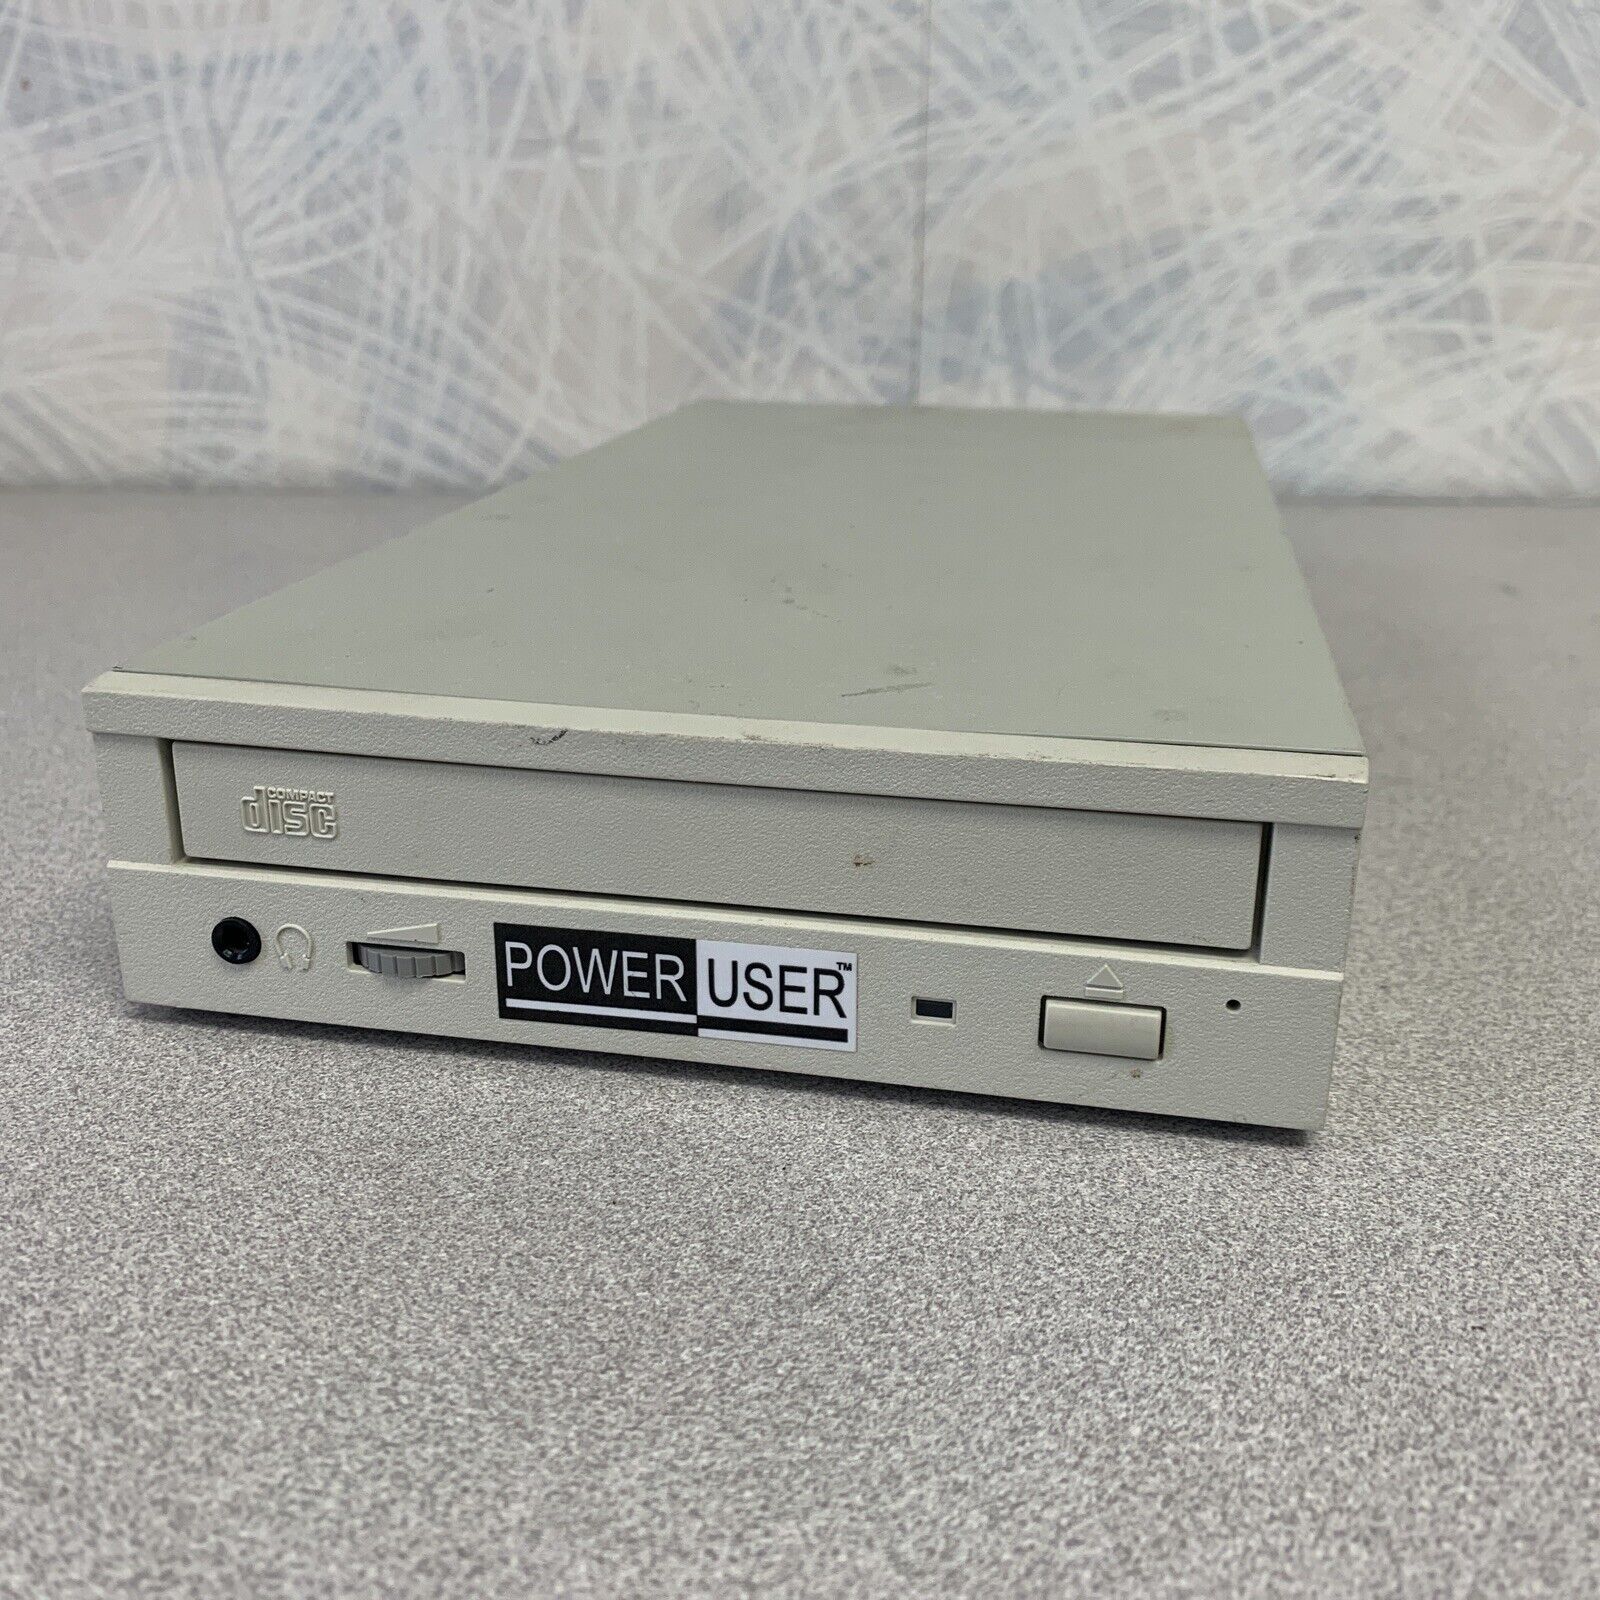 Vintage POWER USER External CD ROM Drive FCC ID: JONCDLC4X01 COOL RARE PC TECH